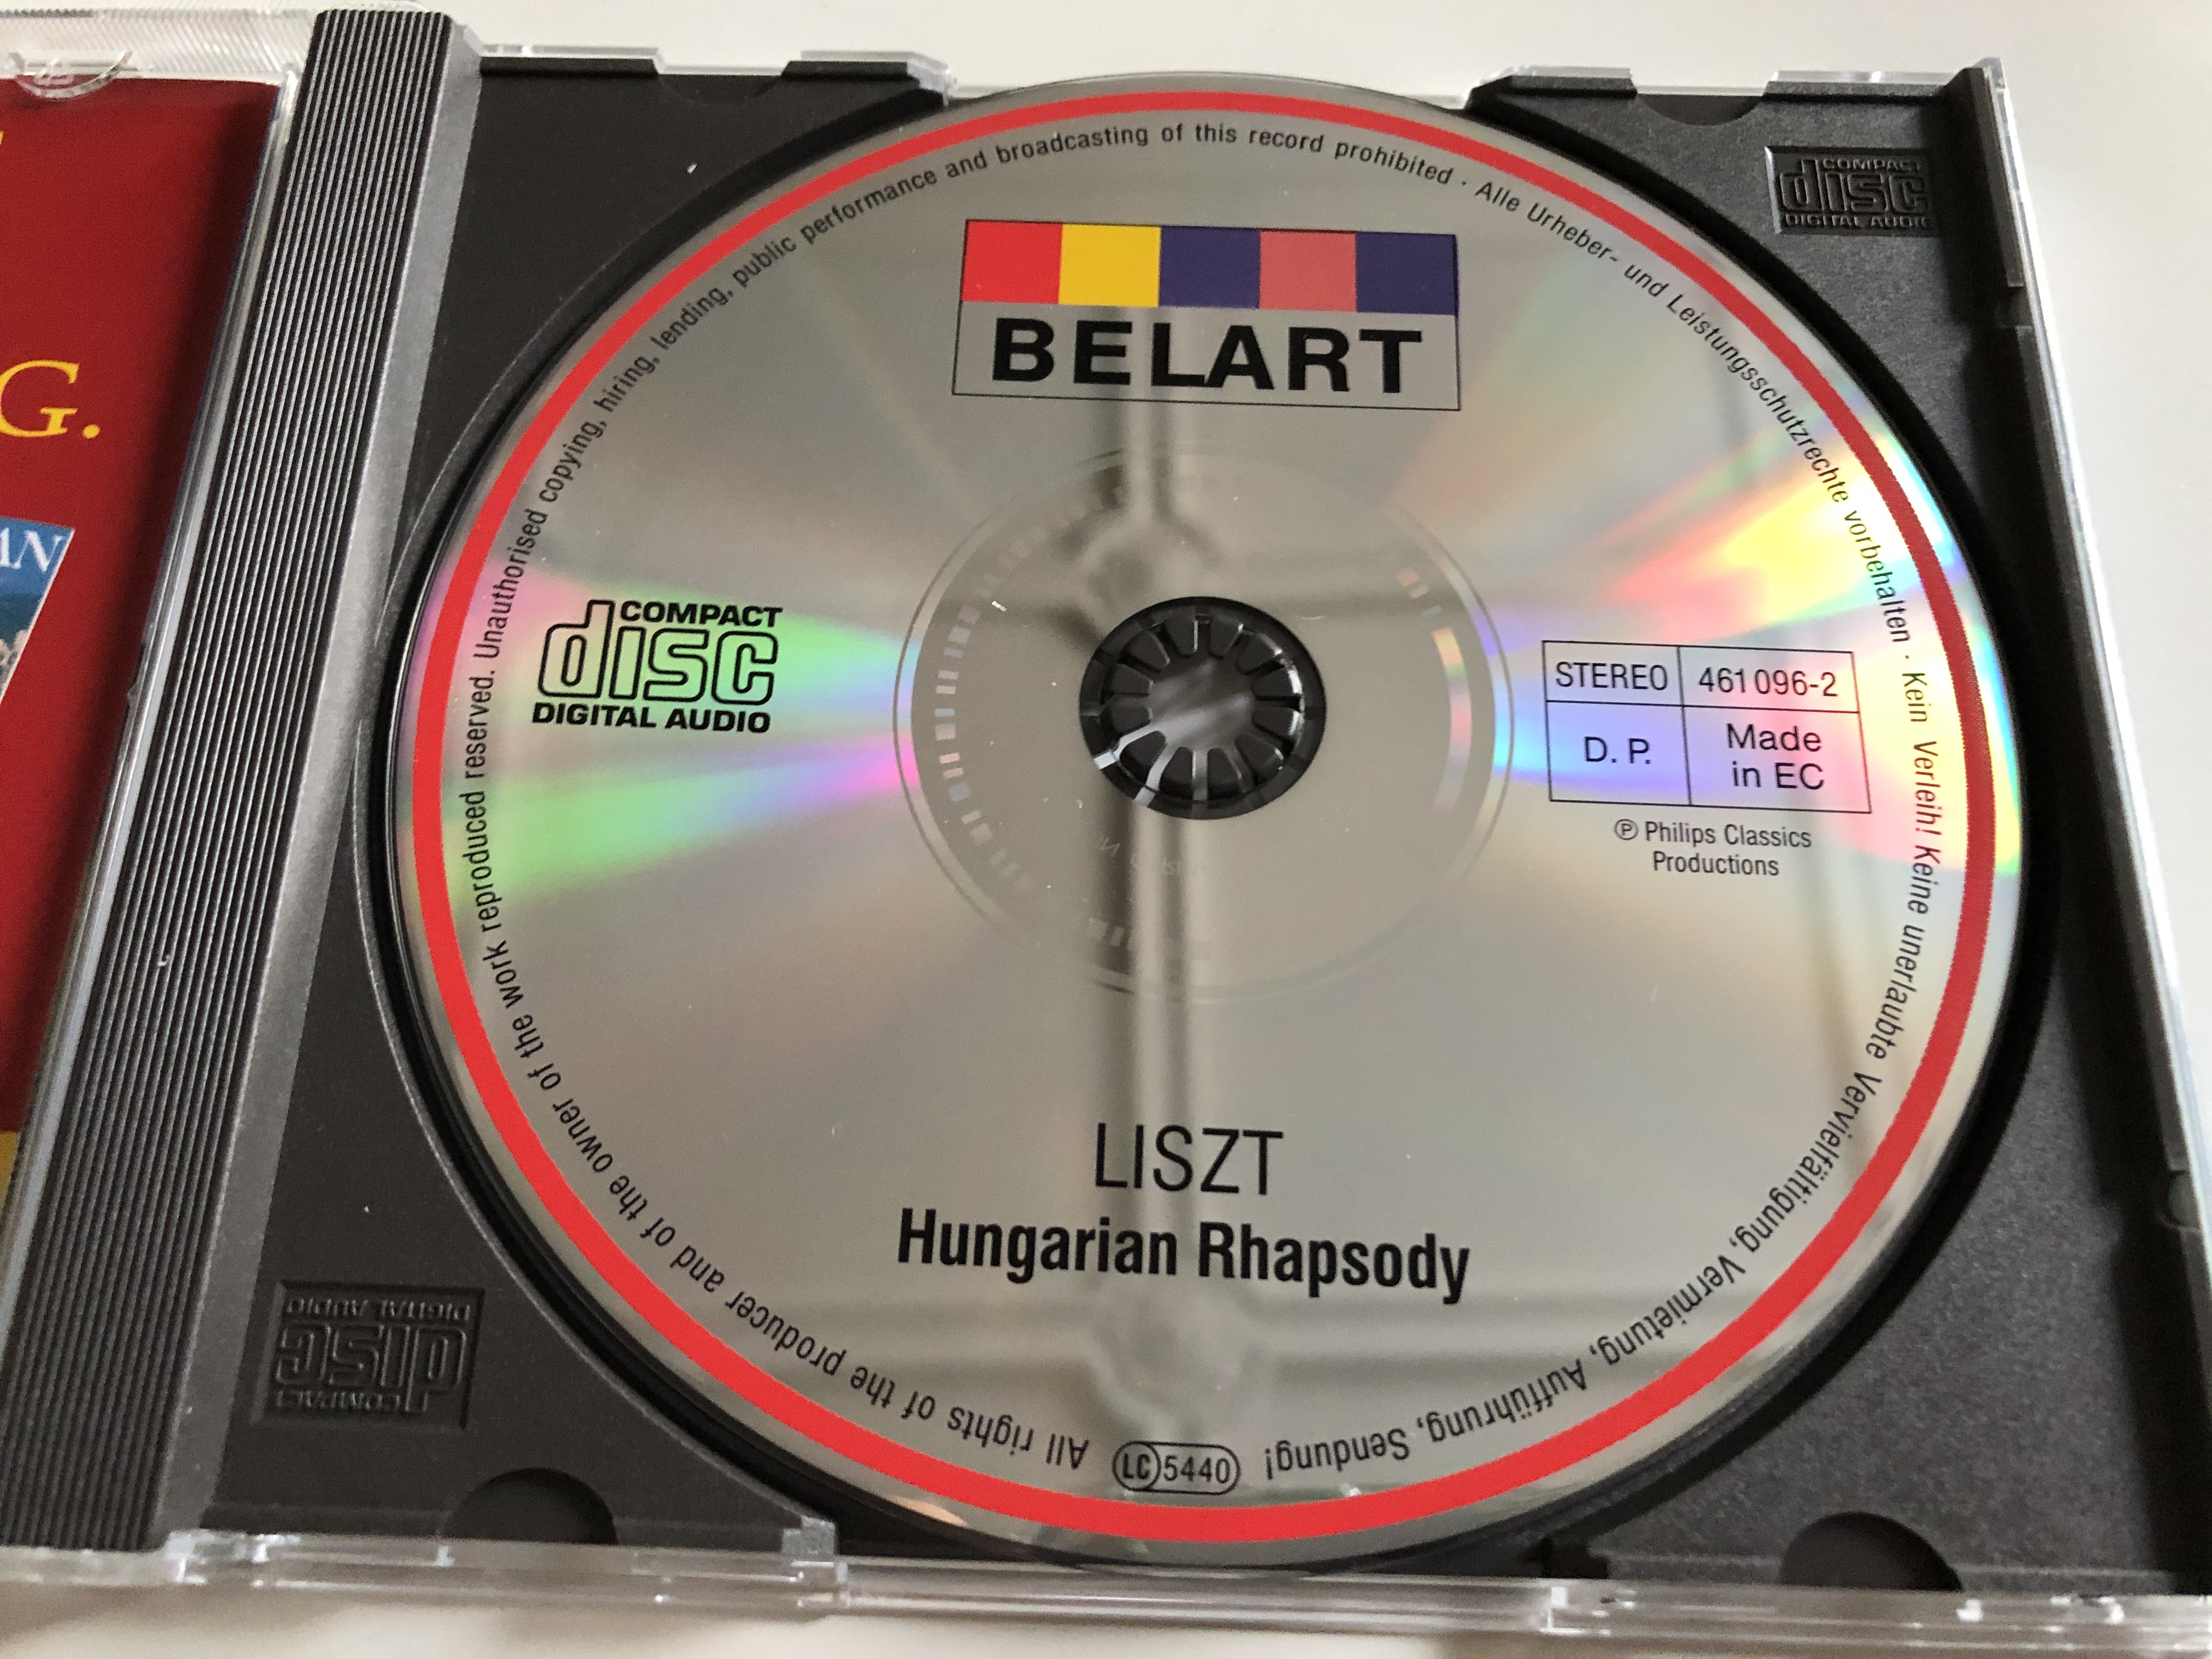 liszt-hungarian-rhapsody-hungarian-fantasia-london-symphony-orchestra-philips-classics-production-audio-cd-stereo-461-096-2-3-.jpg